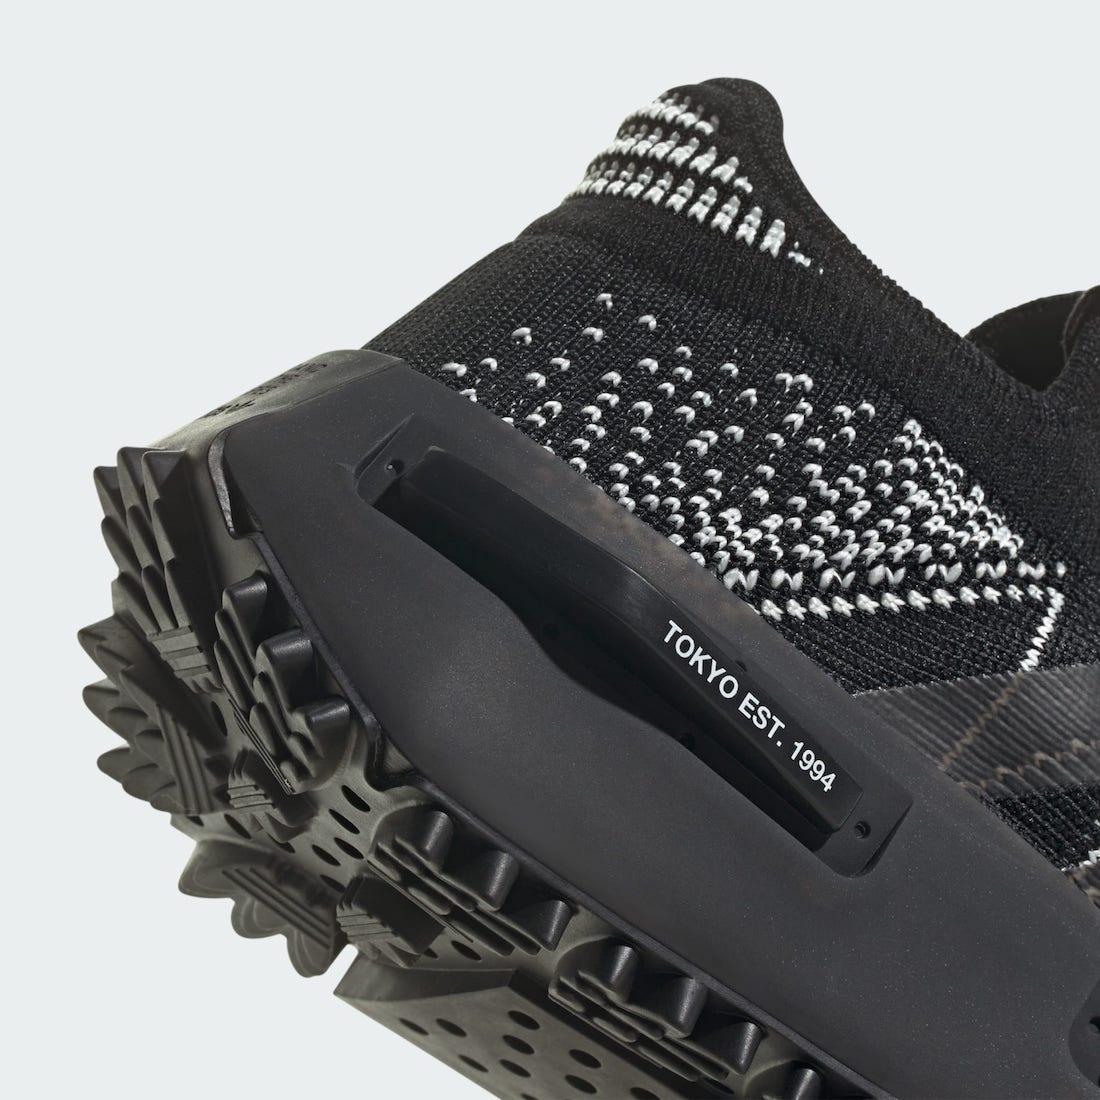 NEIGHBORHOOD x adidas NMD_S1 Knit 'Core Black' Details